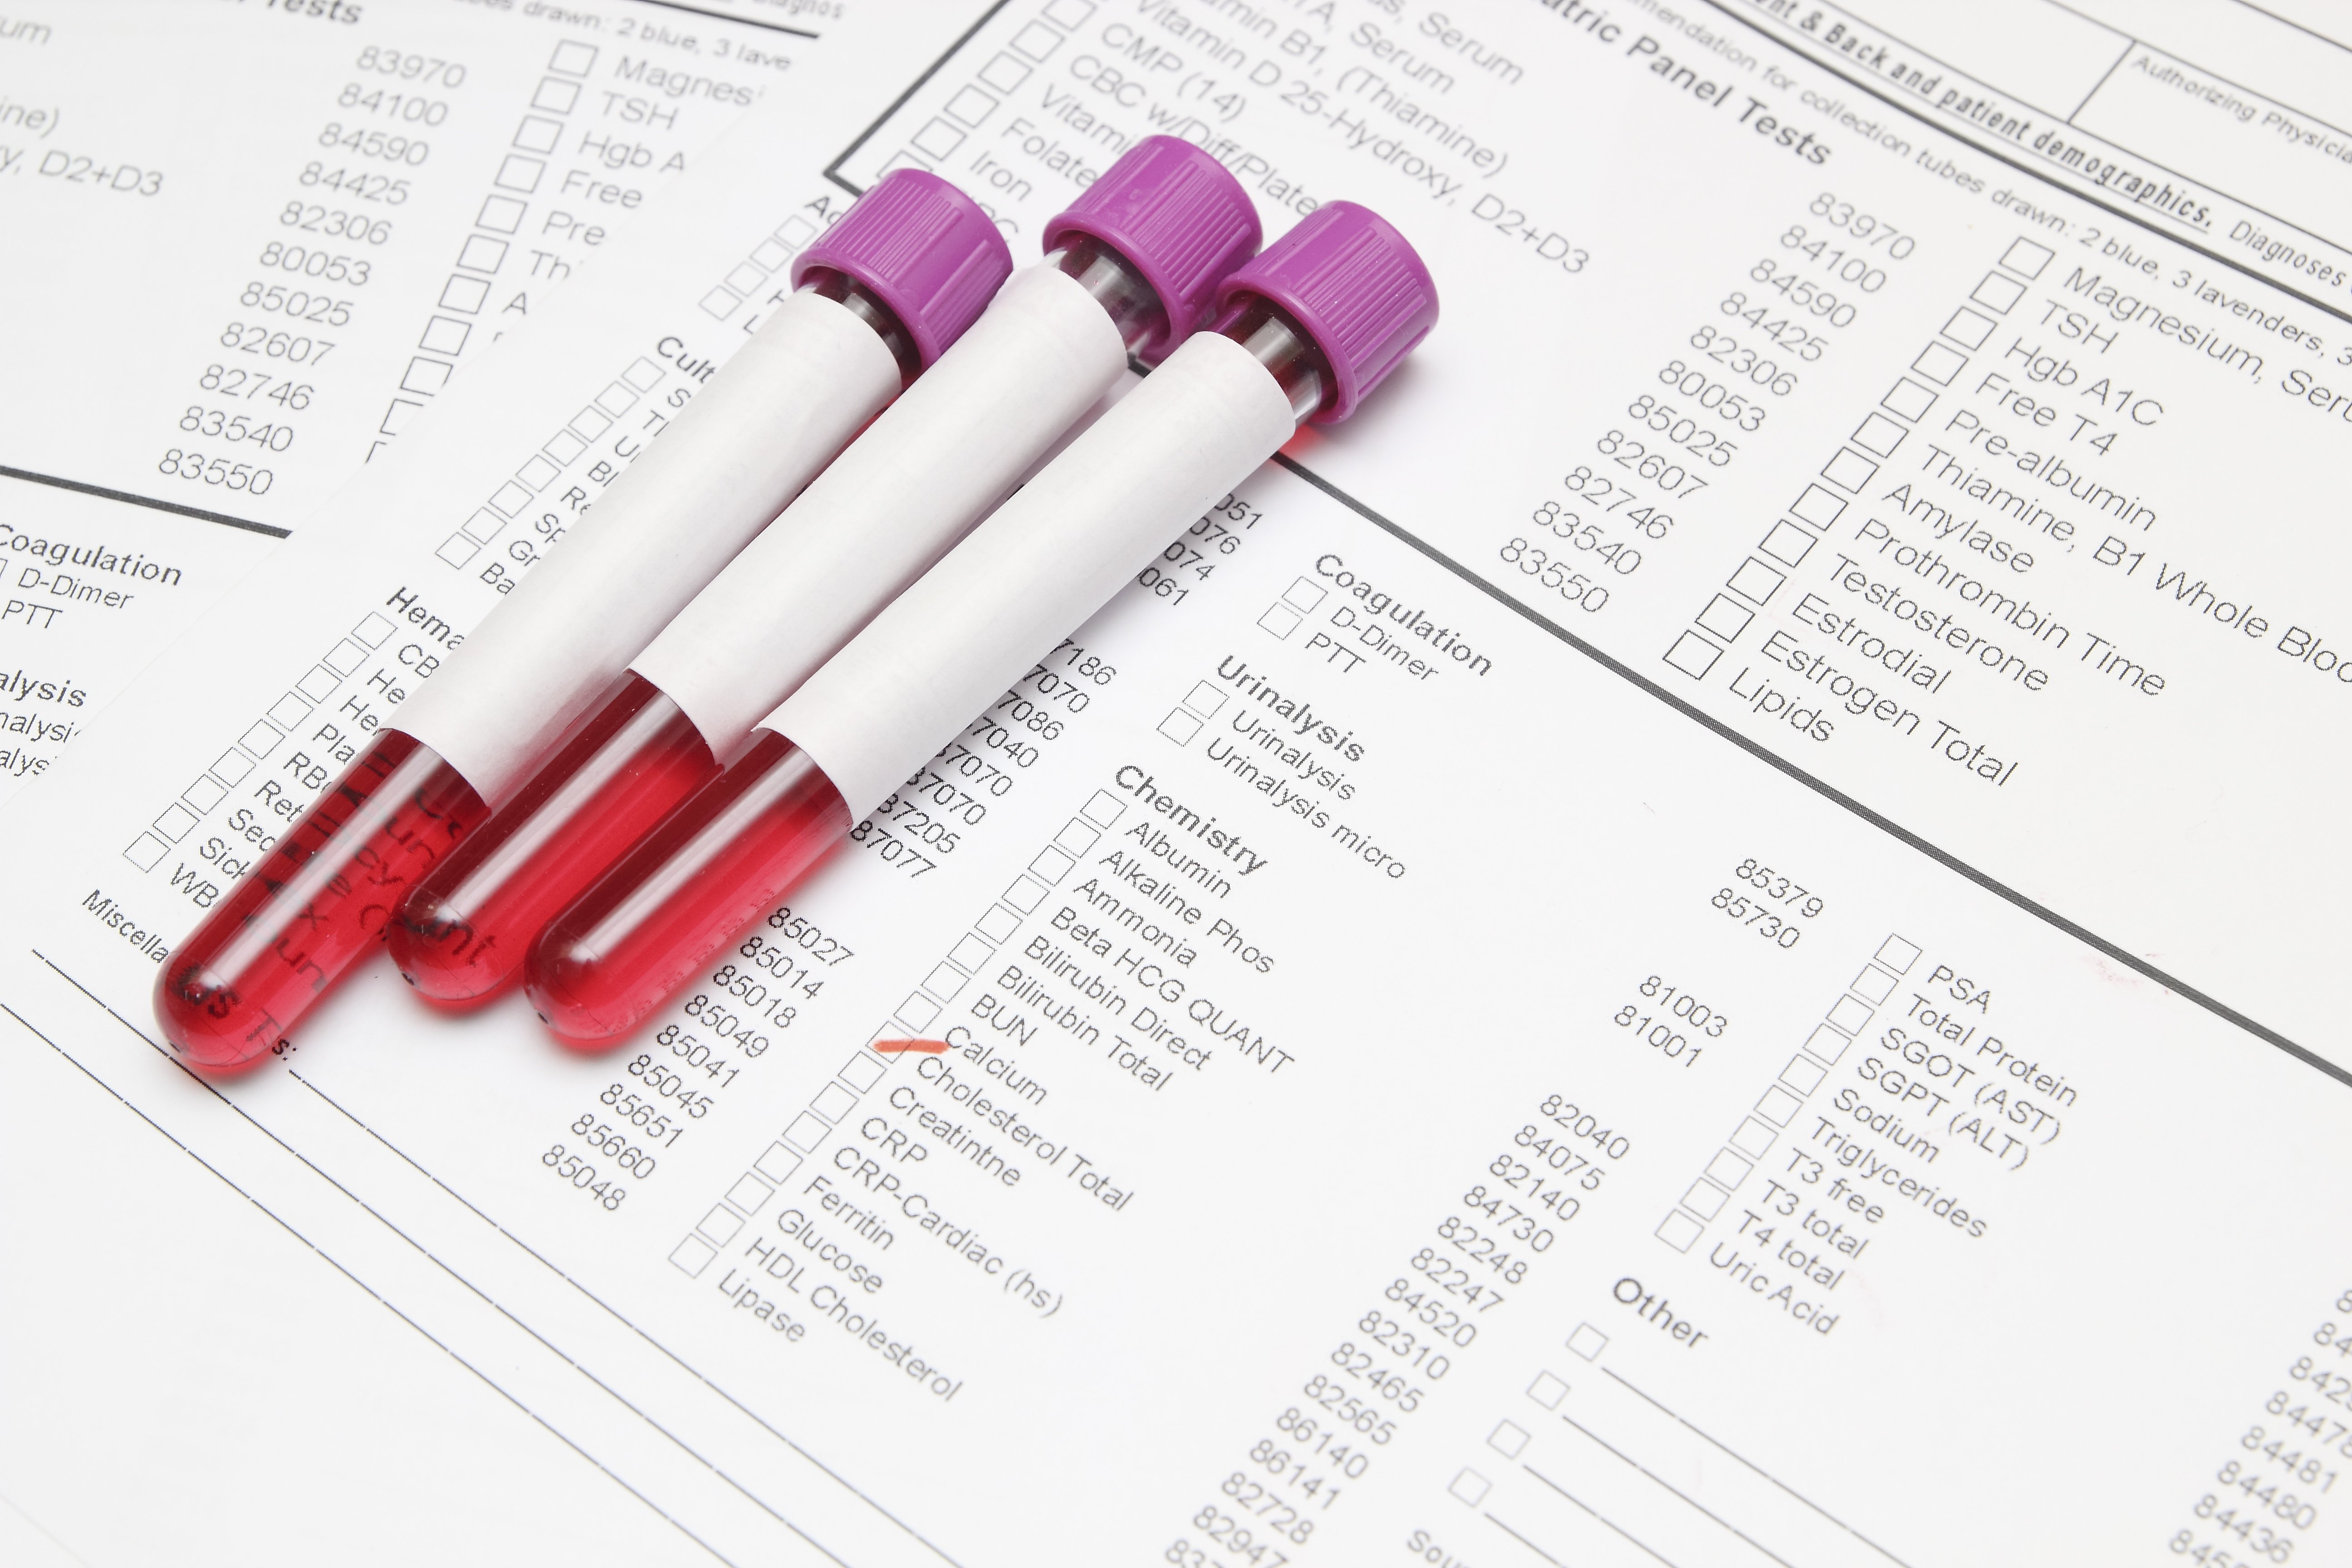 14NOV19 Blood sample stock image-1